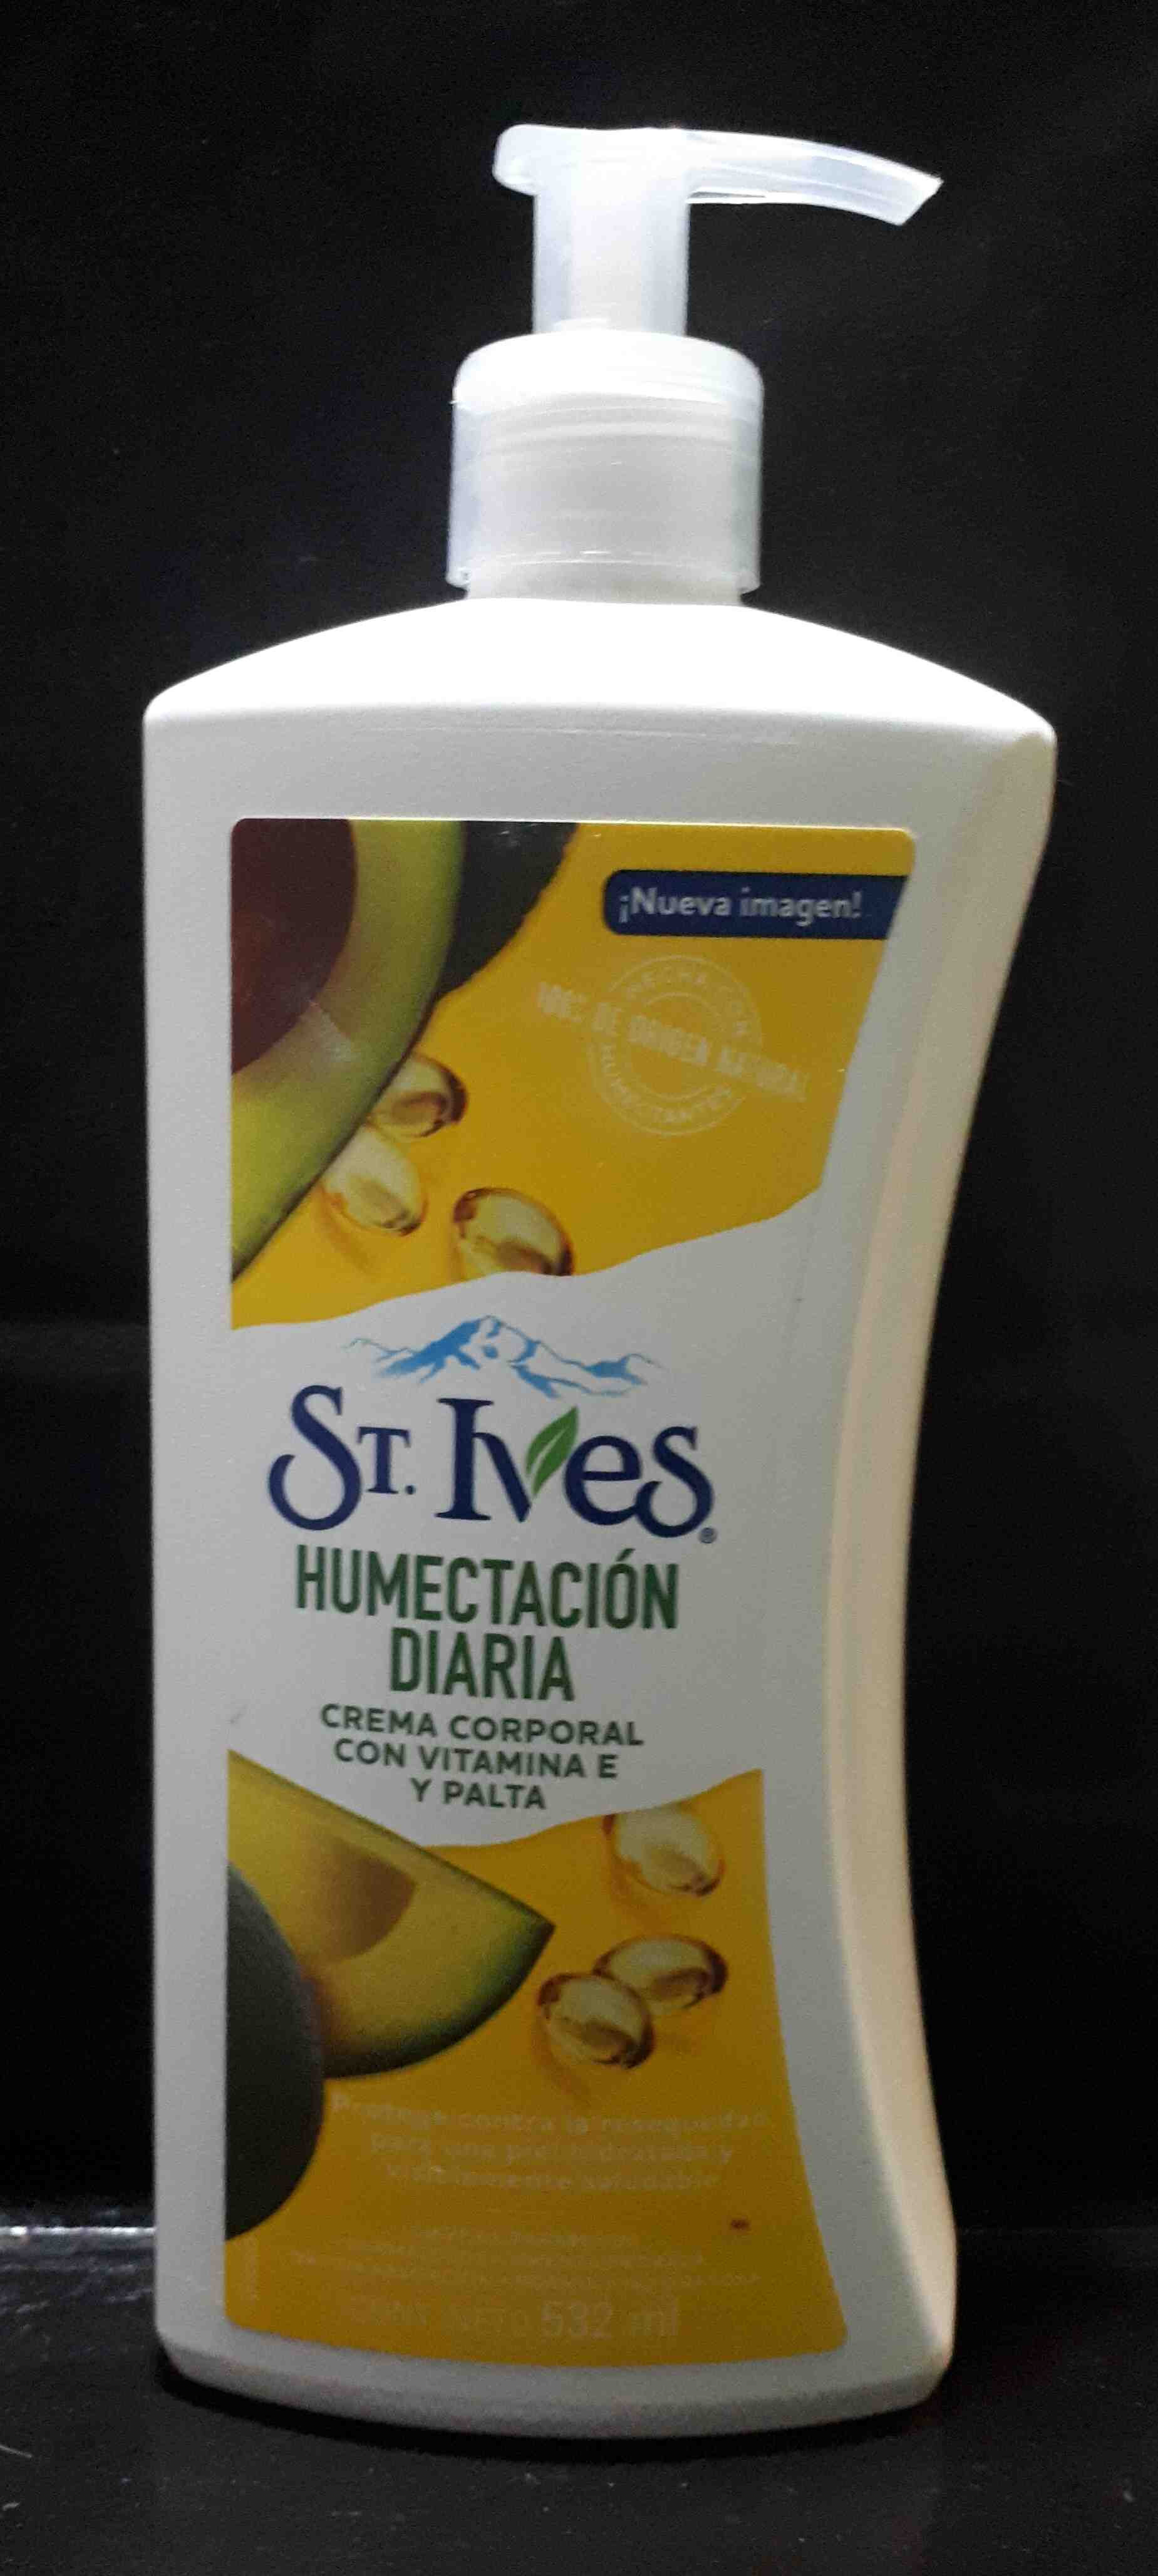 St. Ives. Humectacion diaria. Crema corporal con vitamina E y palta.a - Product - en